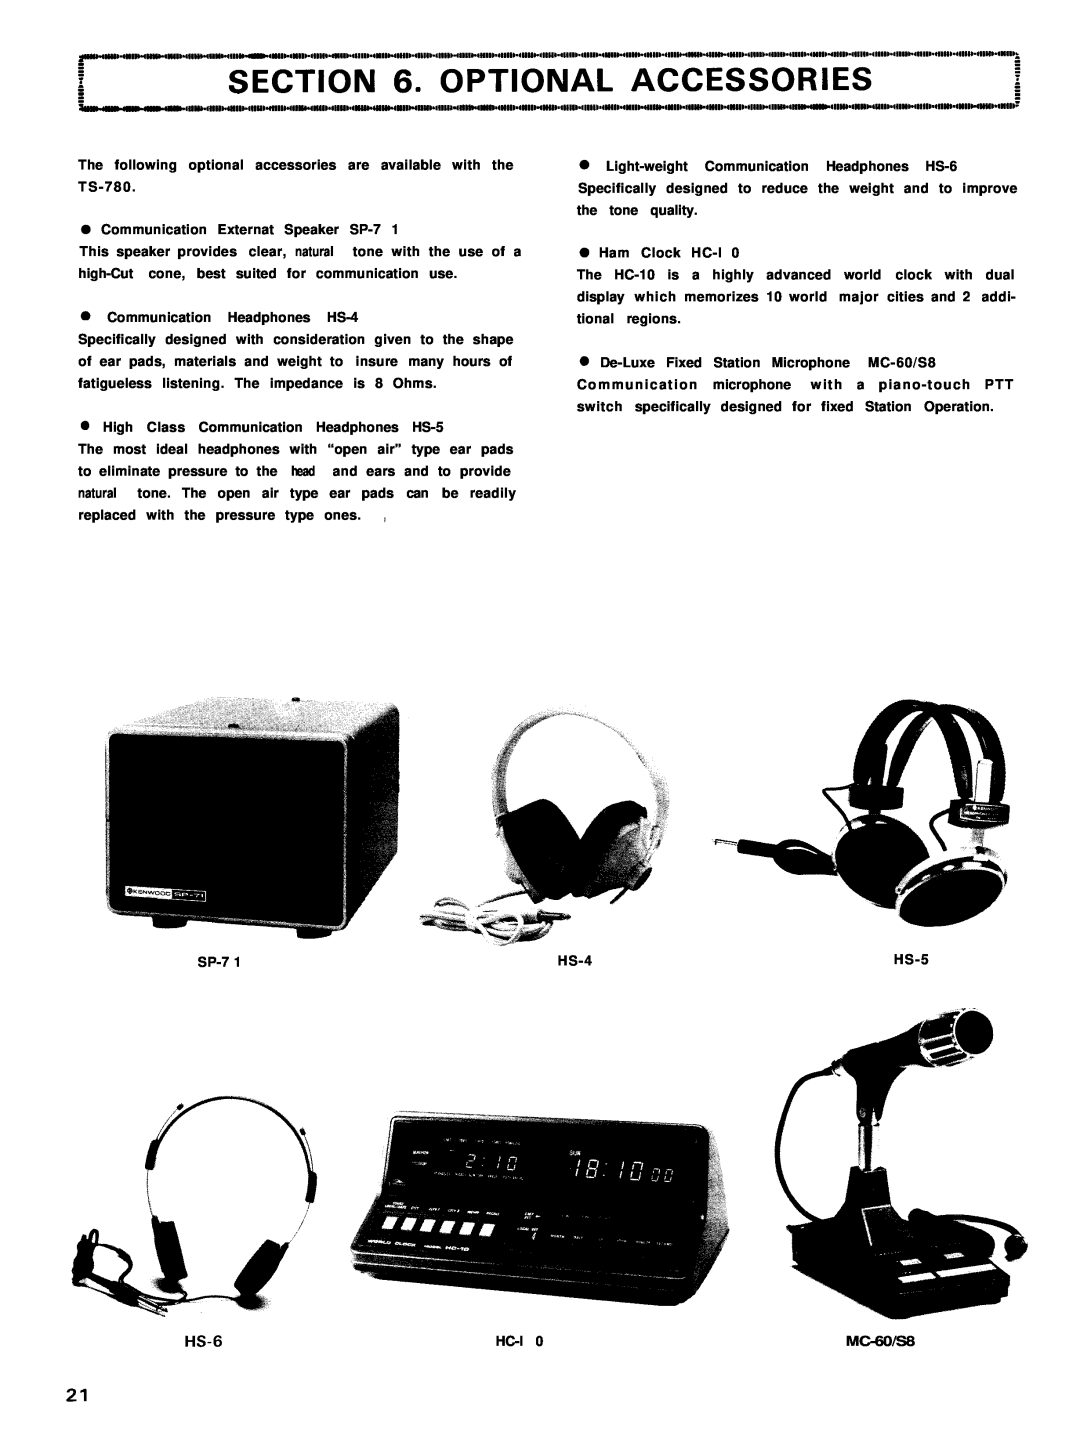 Kenwood TS-780 manual Communication Externat Speaker SP-71, Communication Headphones HS-4, Ham Clock HC-l0, HS-5, MC-60/S8 